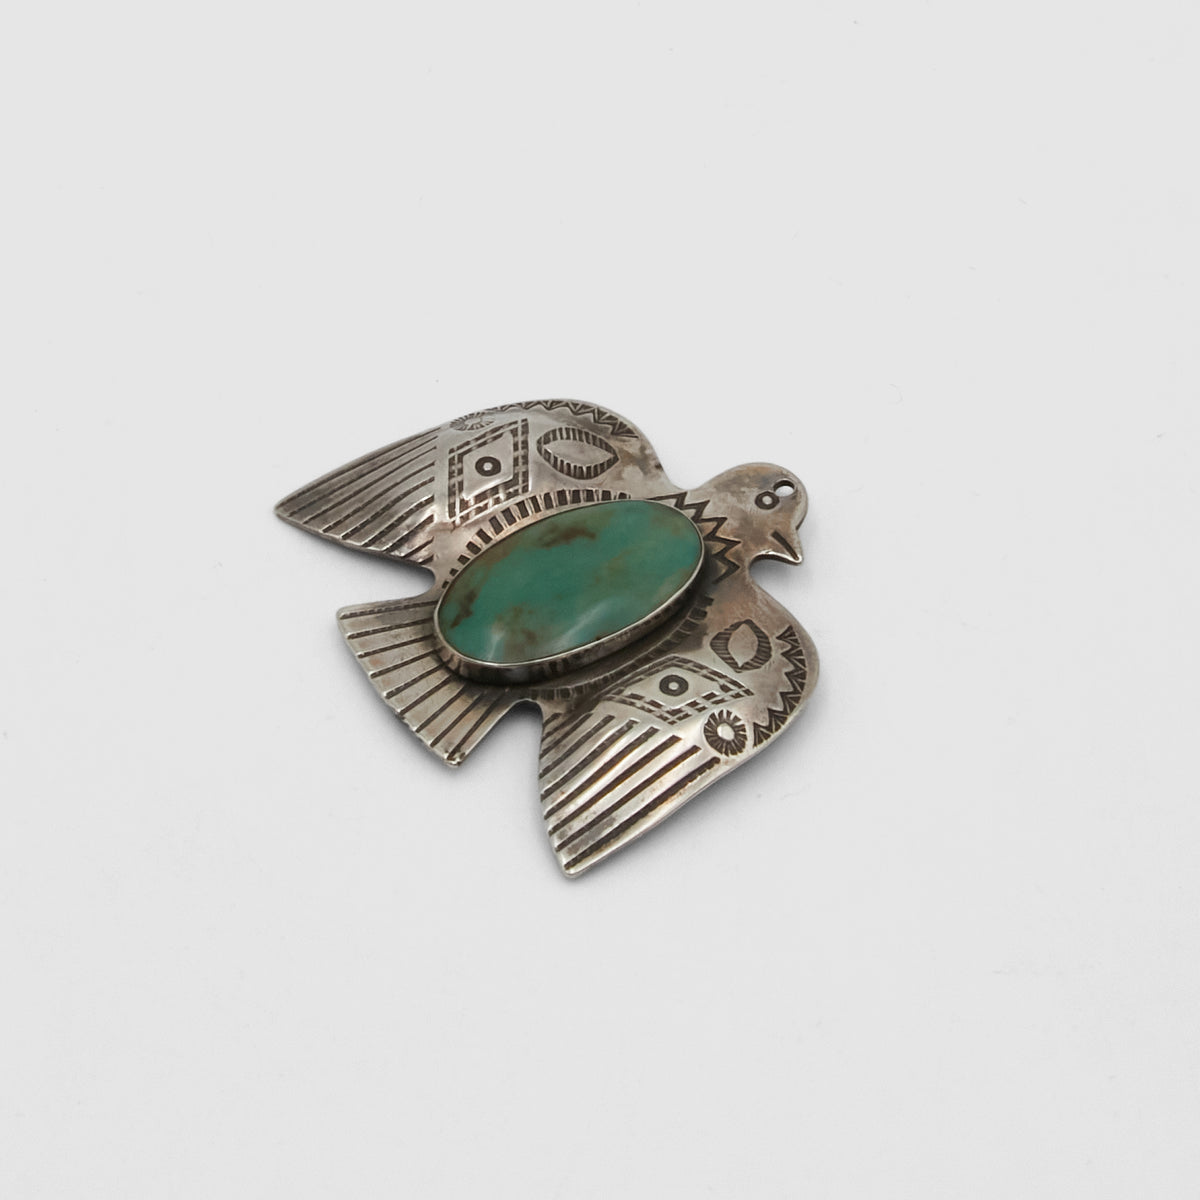 Vintage Jewelry Thunderbird Brooch